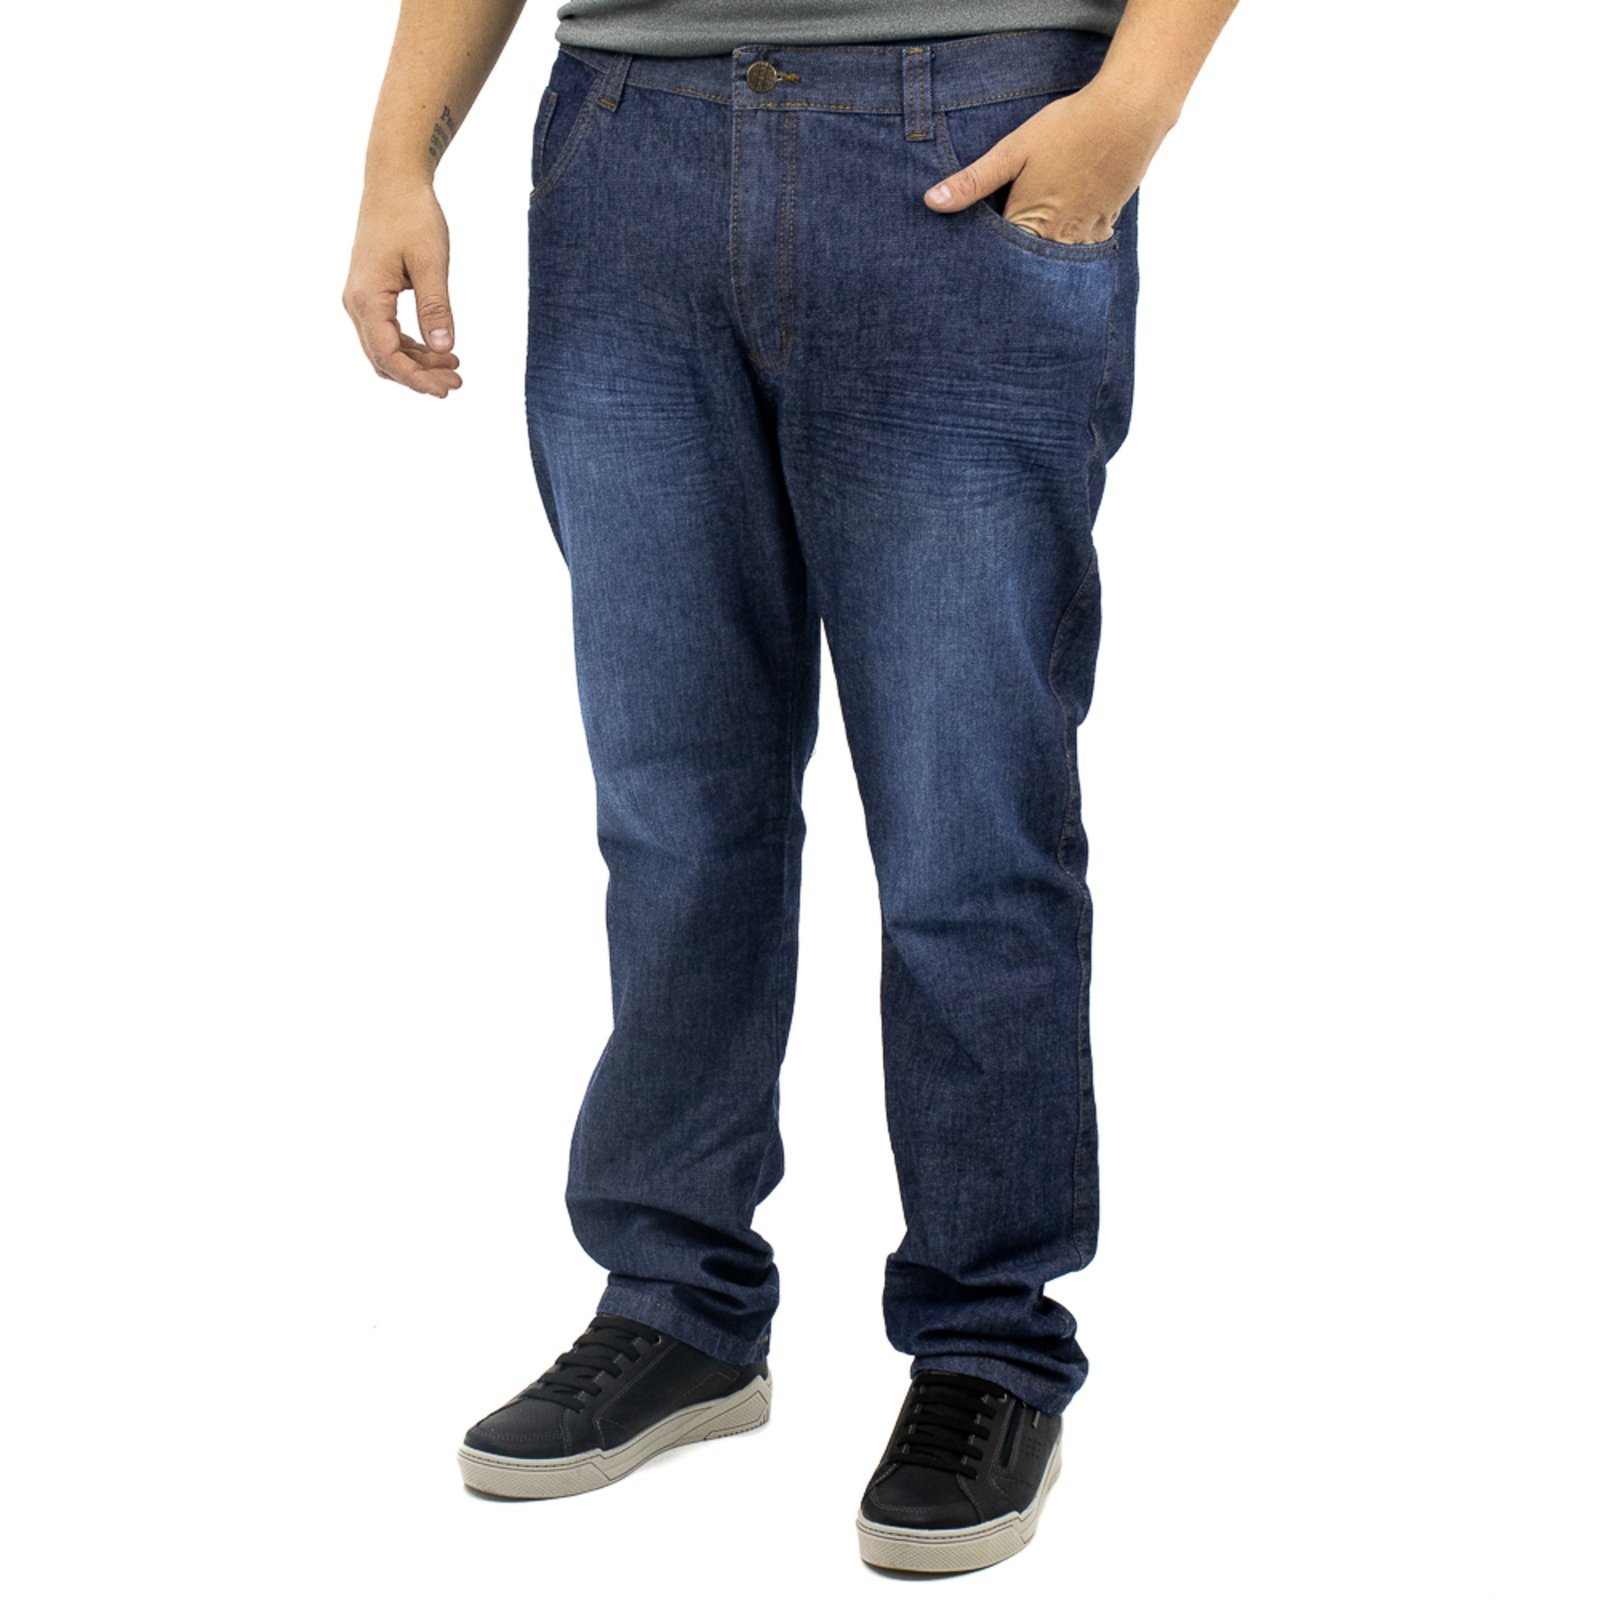 Calça Jeans Básica Juvenil Menino - Marshoes